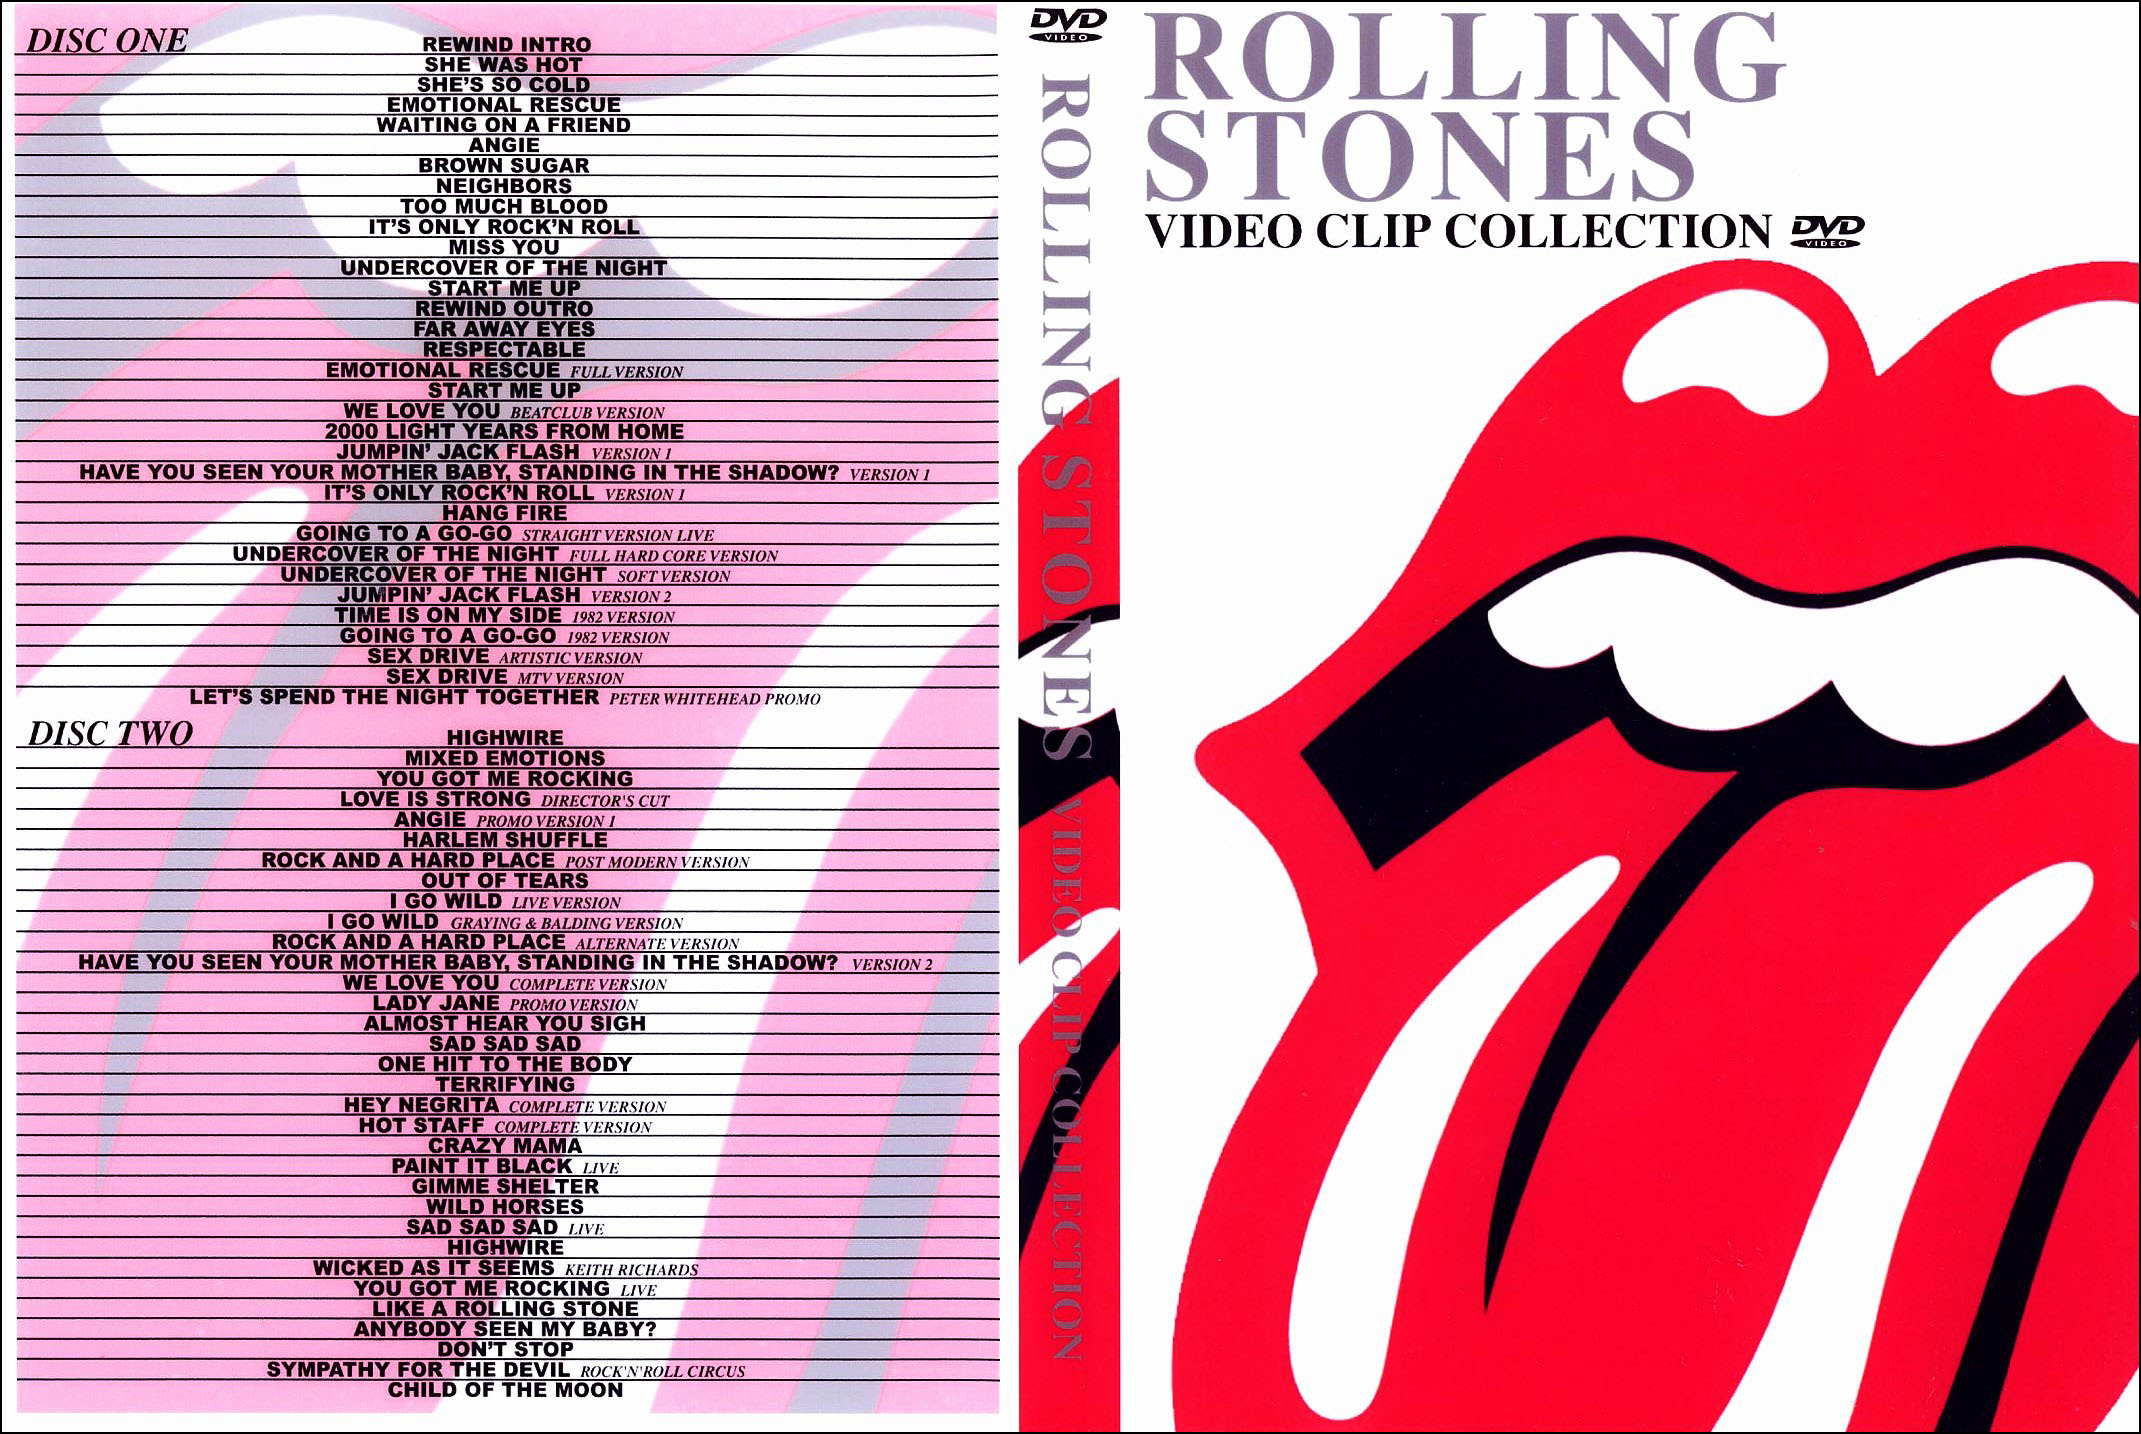 Rolling stones baby. Angie the Rolling Stones. The Rolling Stones - Angie фото. Бритни на обложке Роллинг стоунз. Роллинг стоунз журнал 2011.